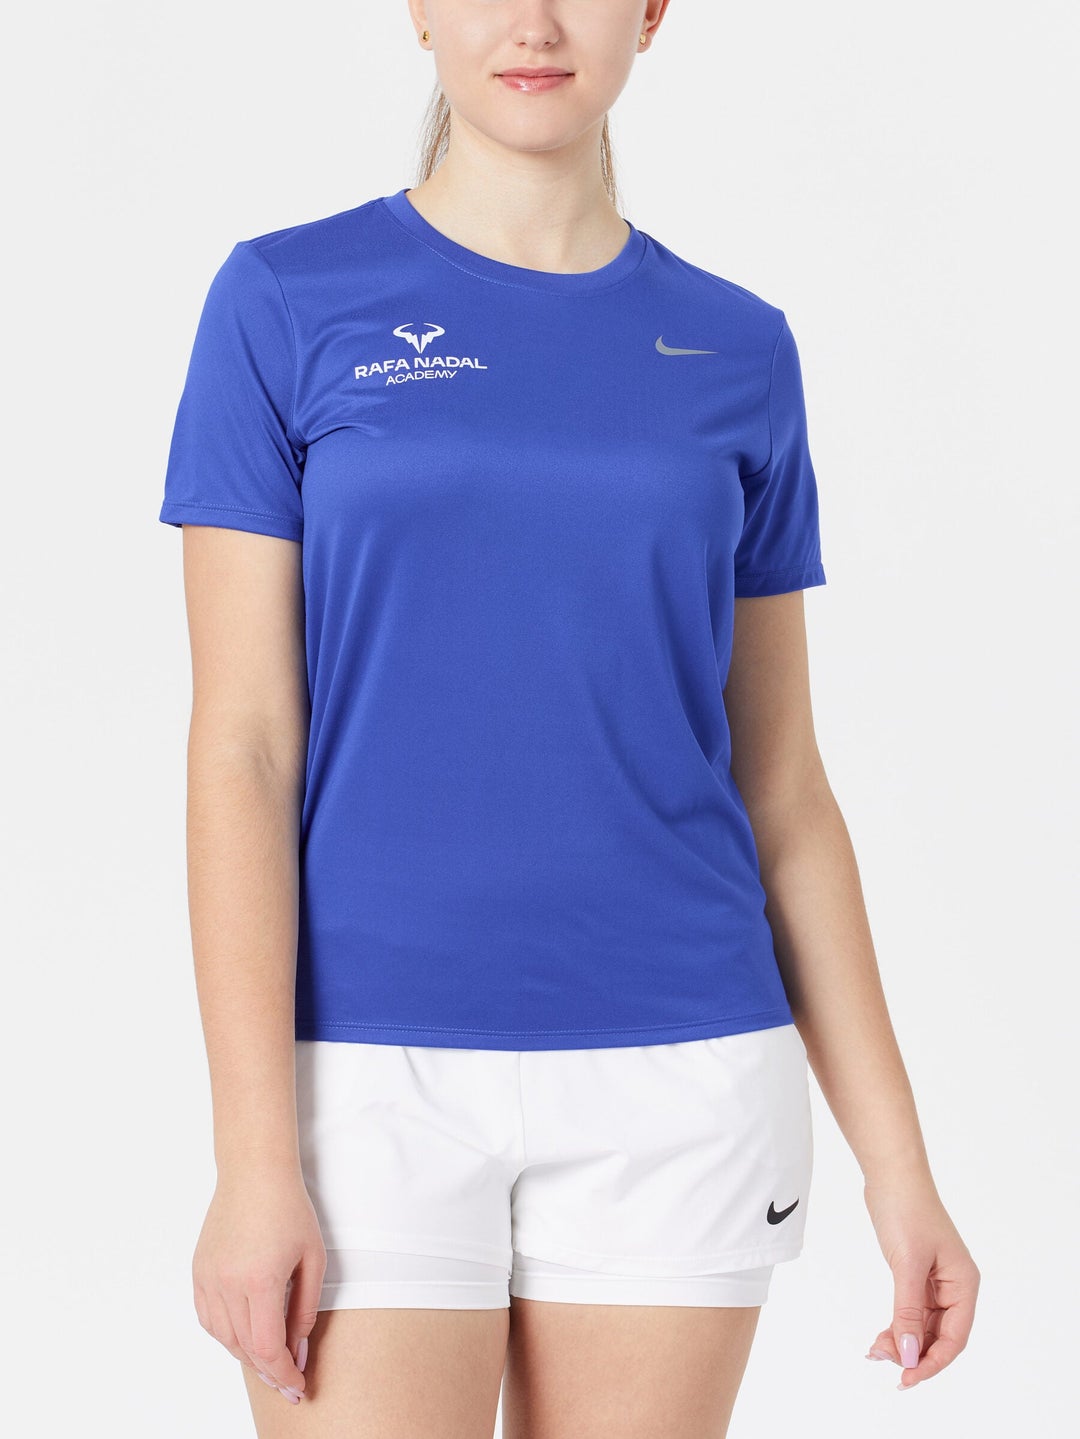 Nike Rafa Nadal Academy Camp Women's Top | Tennis Warehouse